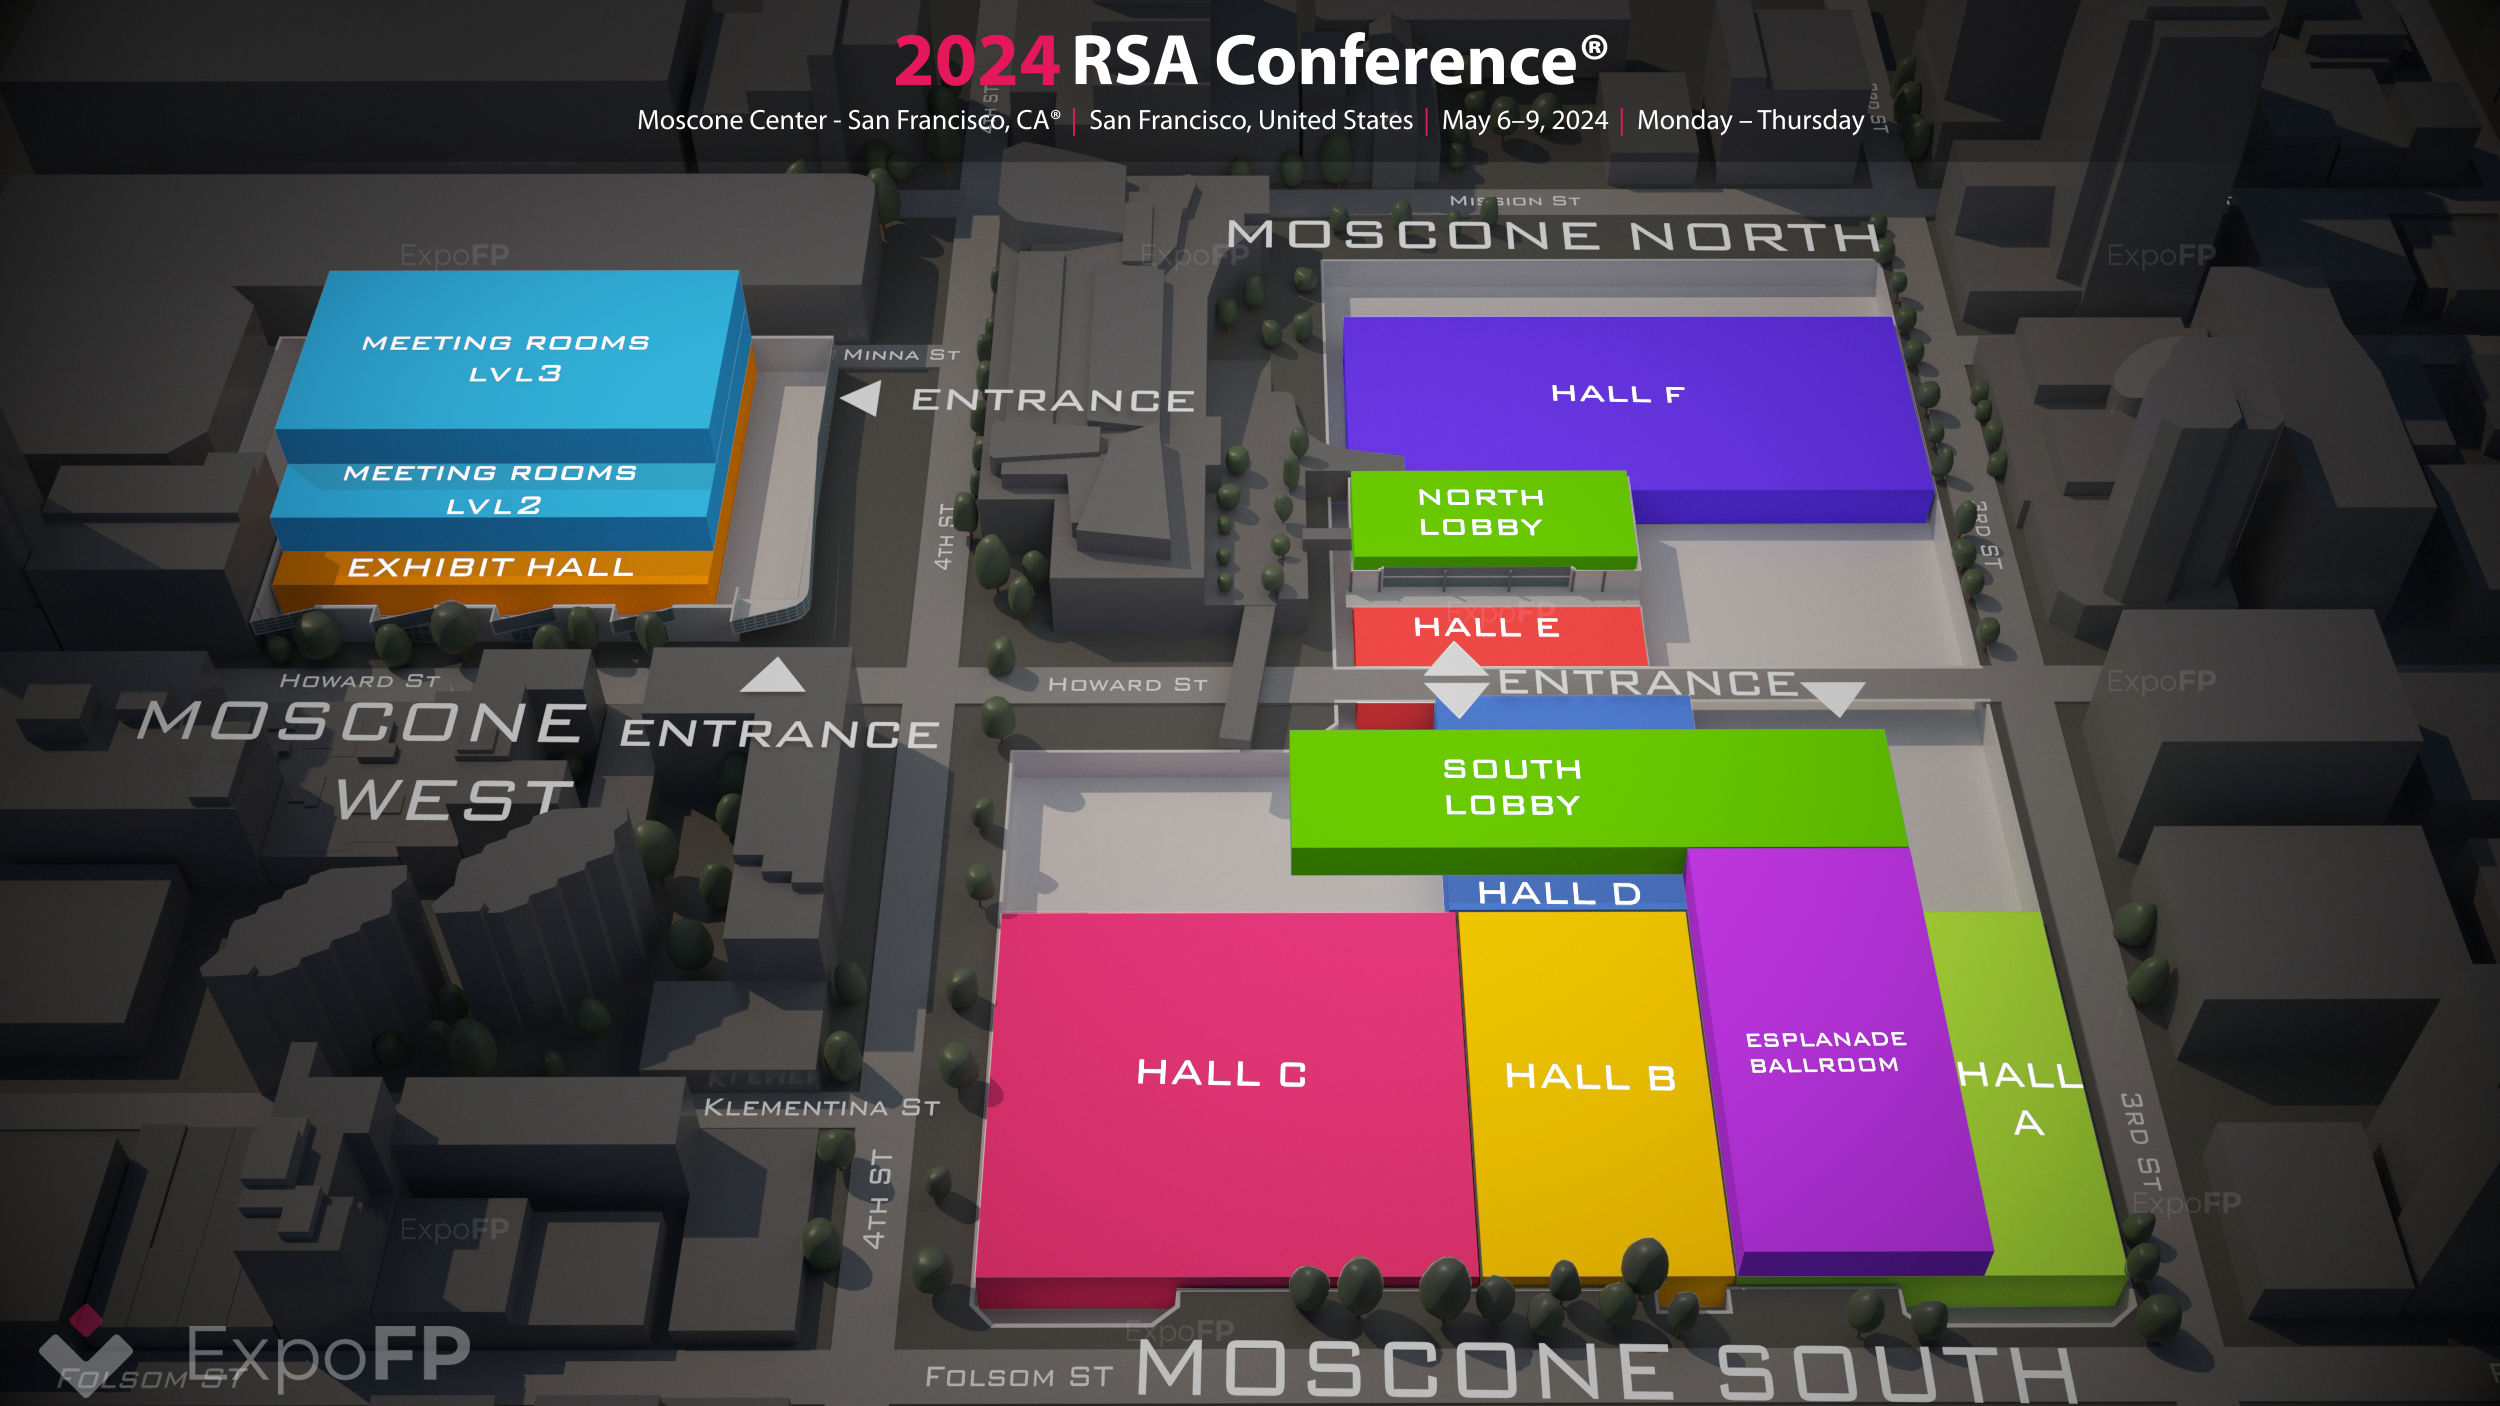 RSA Conference 2024 3D floor plan